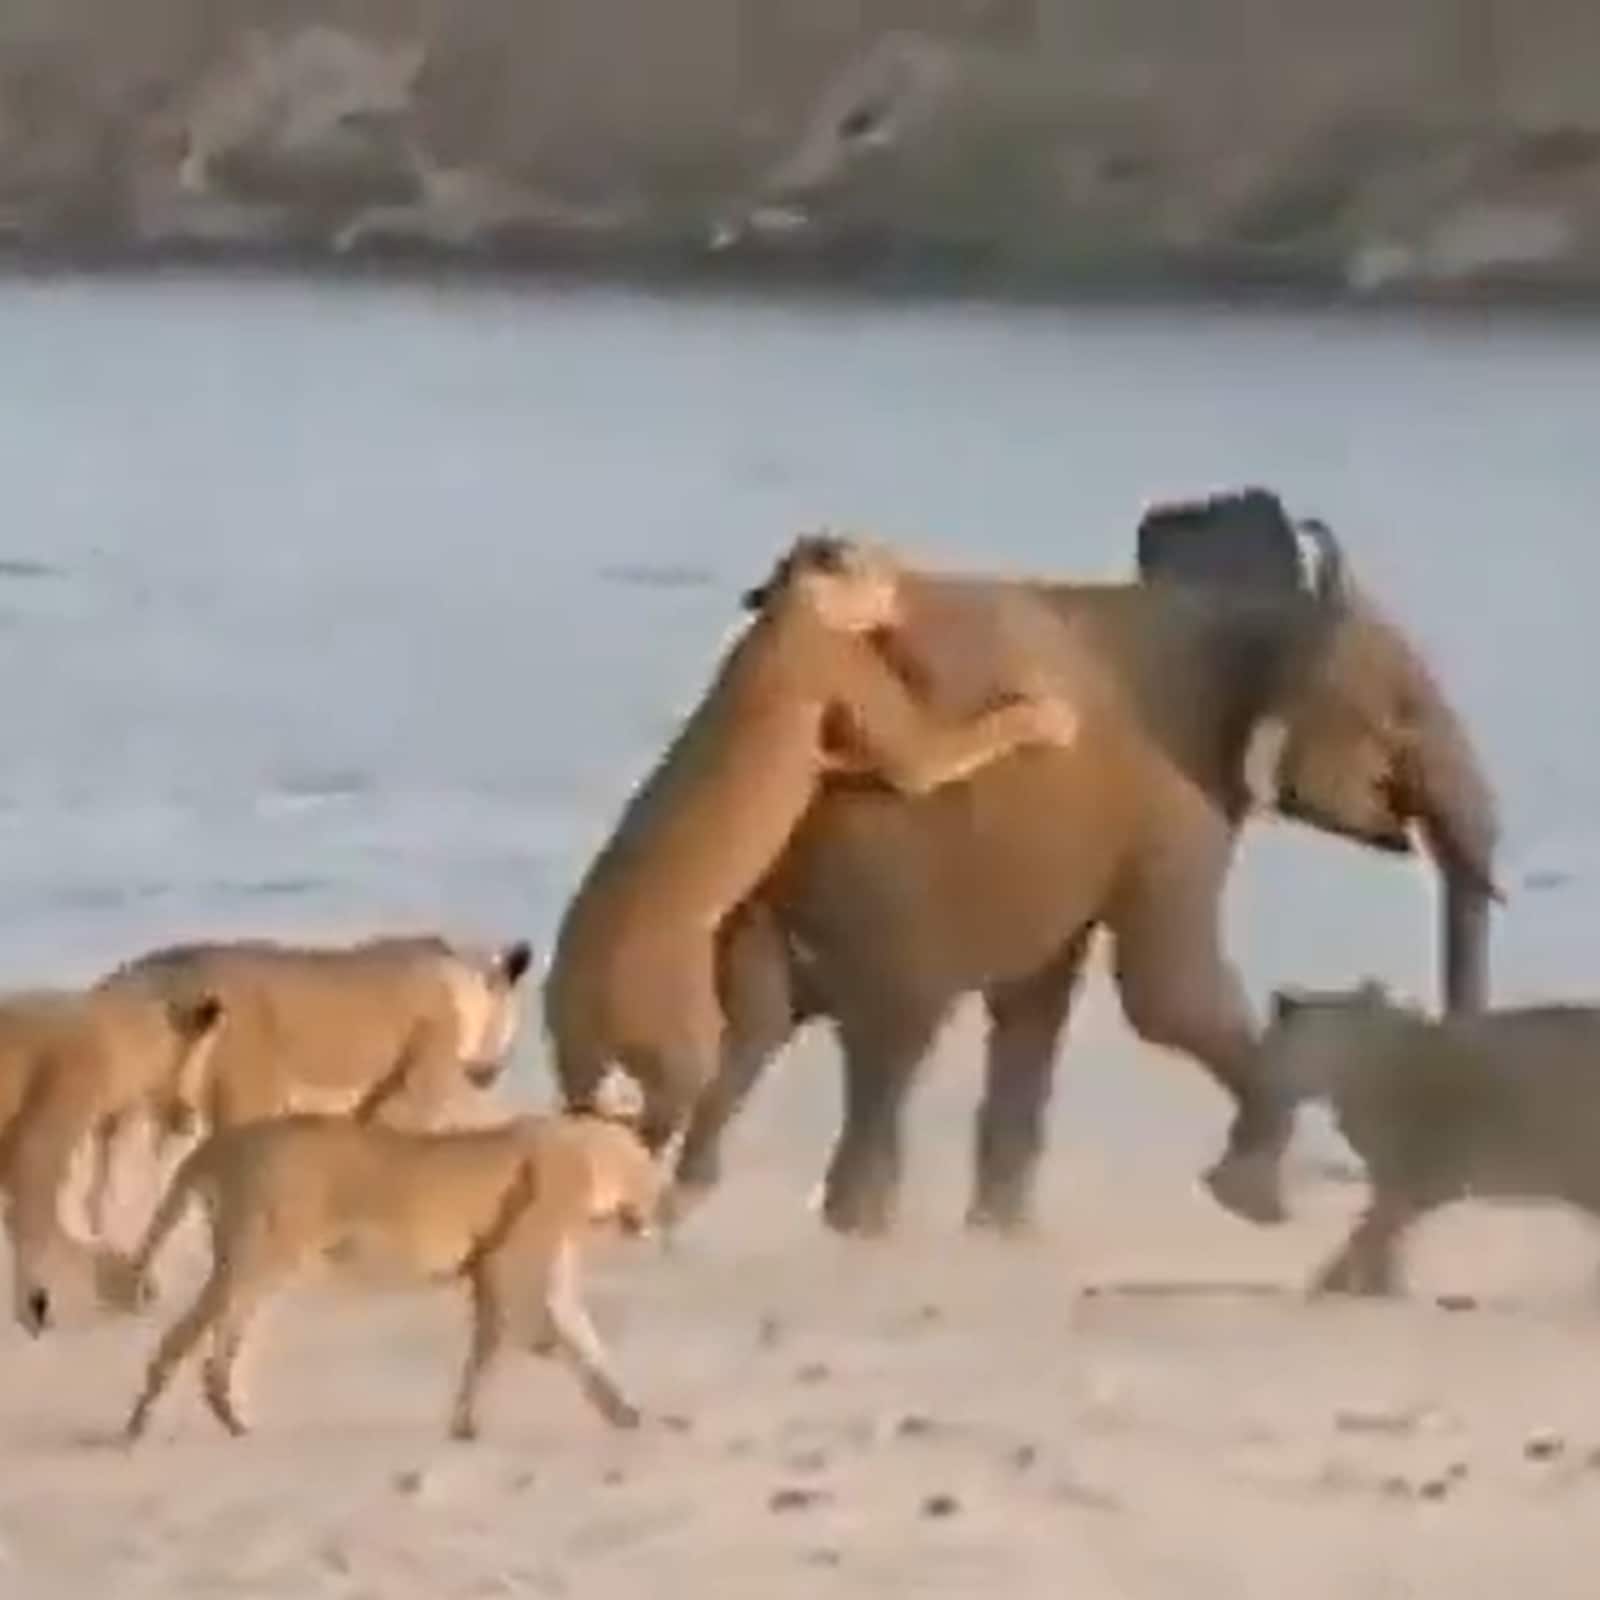 elephant attack lion